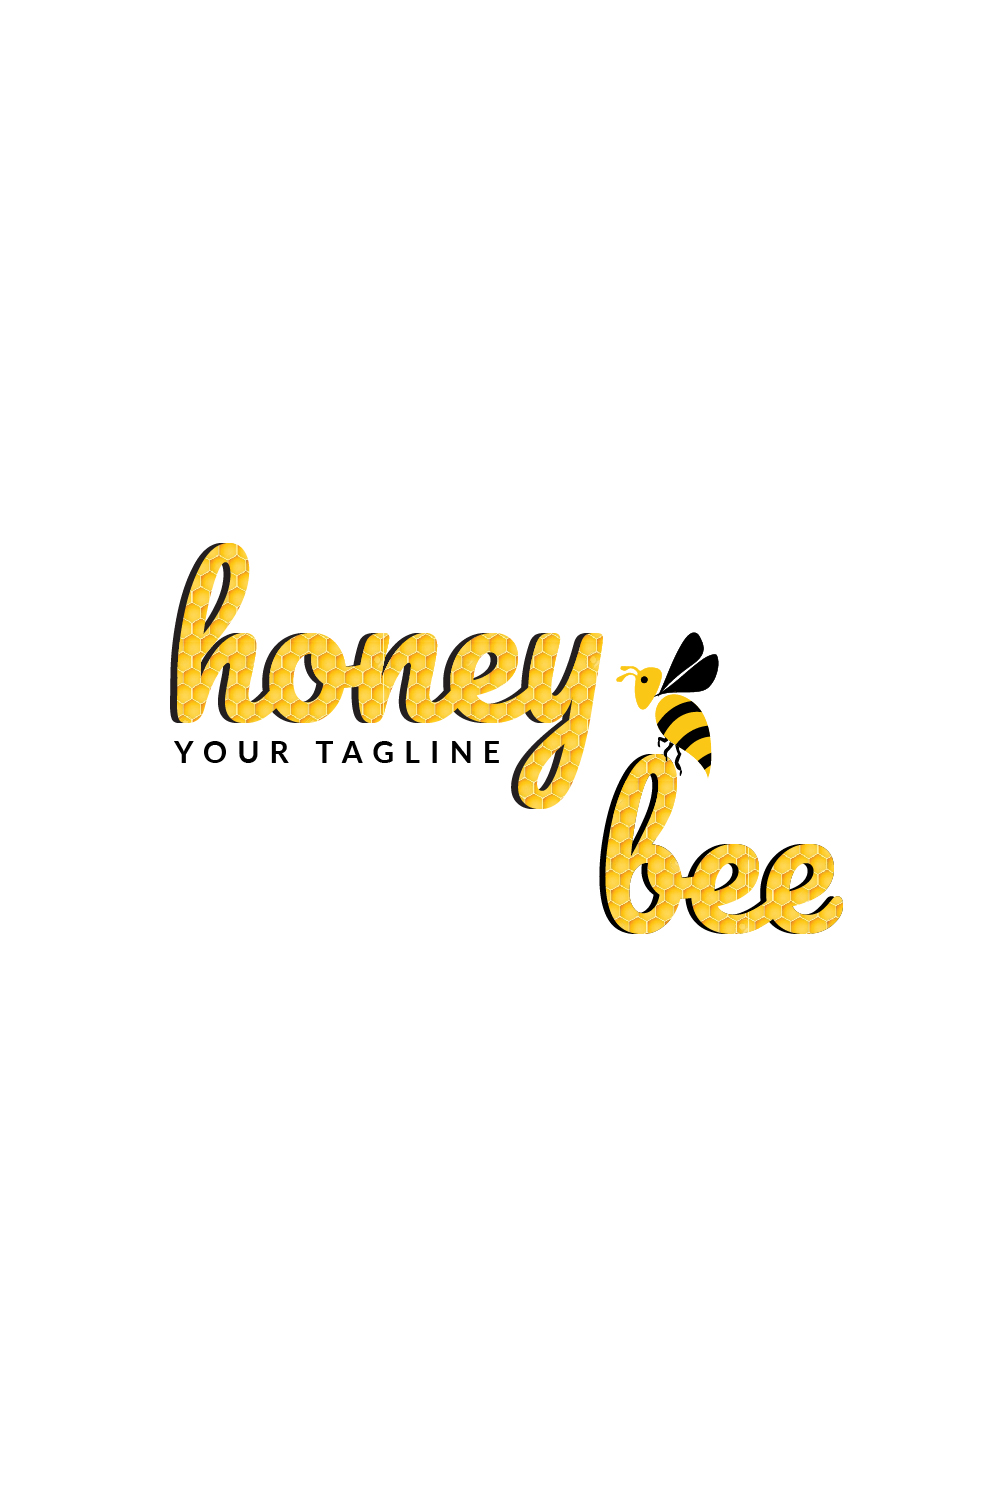 Honey Bee logo pinterest preview image.